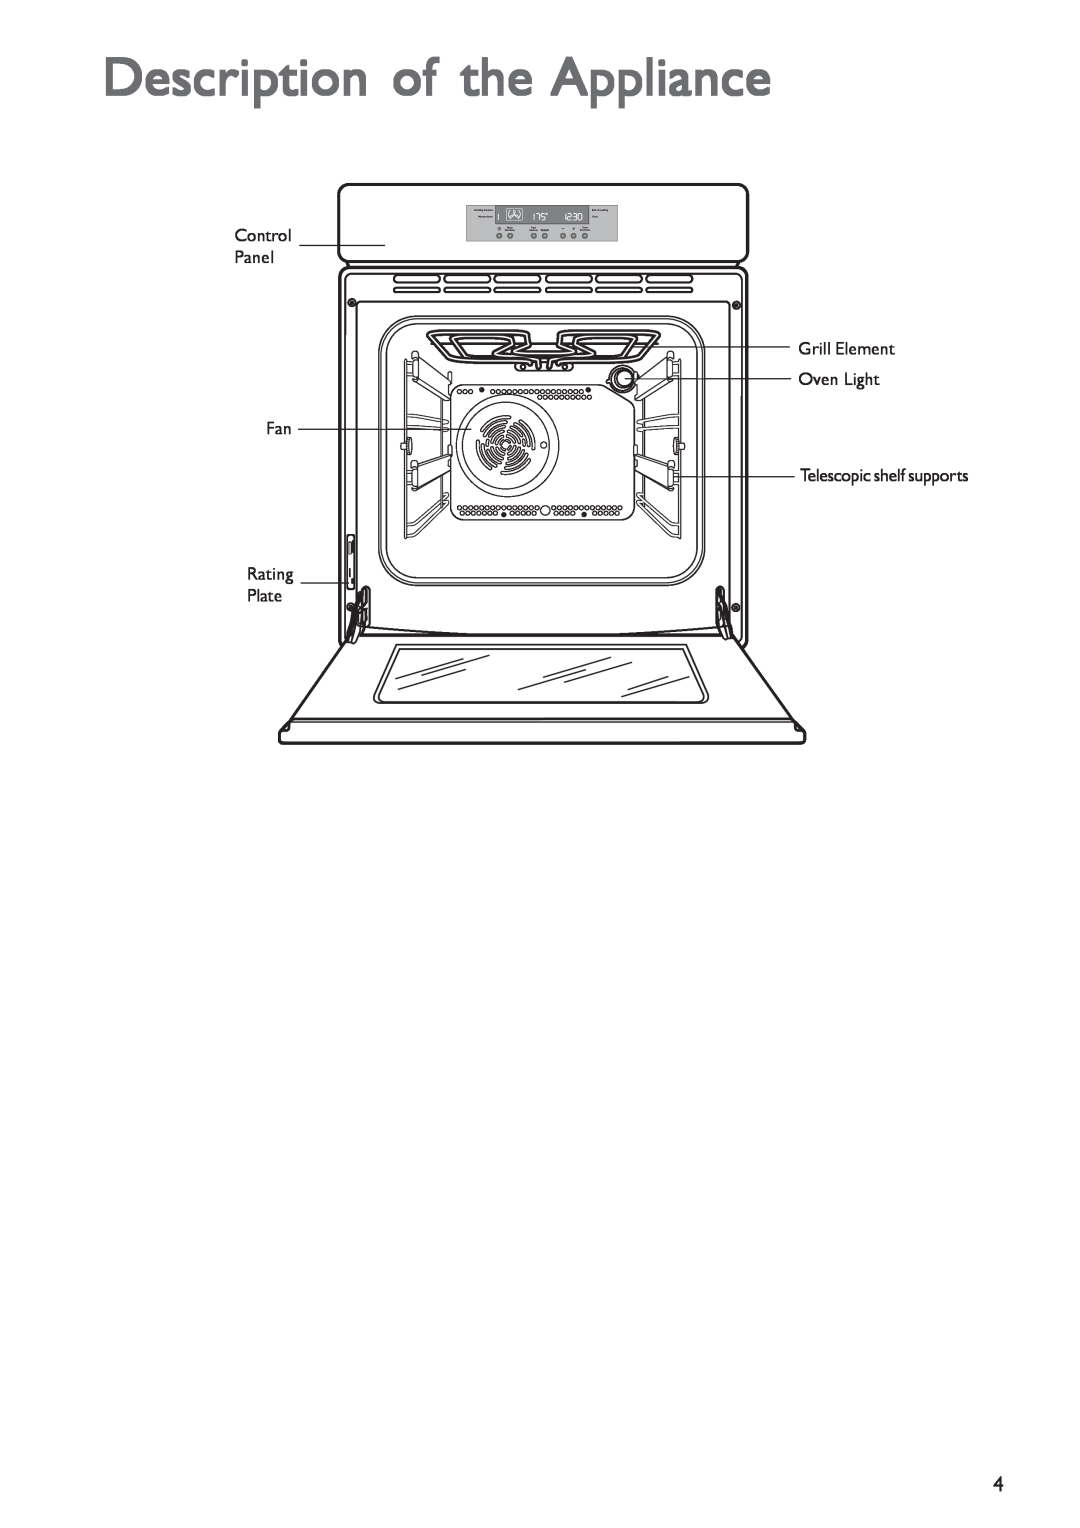 John Lewis JLBIOS603 instruction manual Description of the Appliance, Control Panel Grill Element Oven Light Fan 